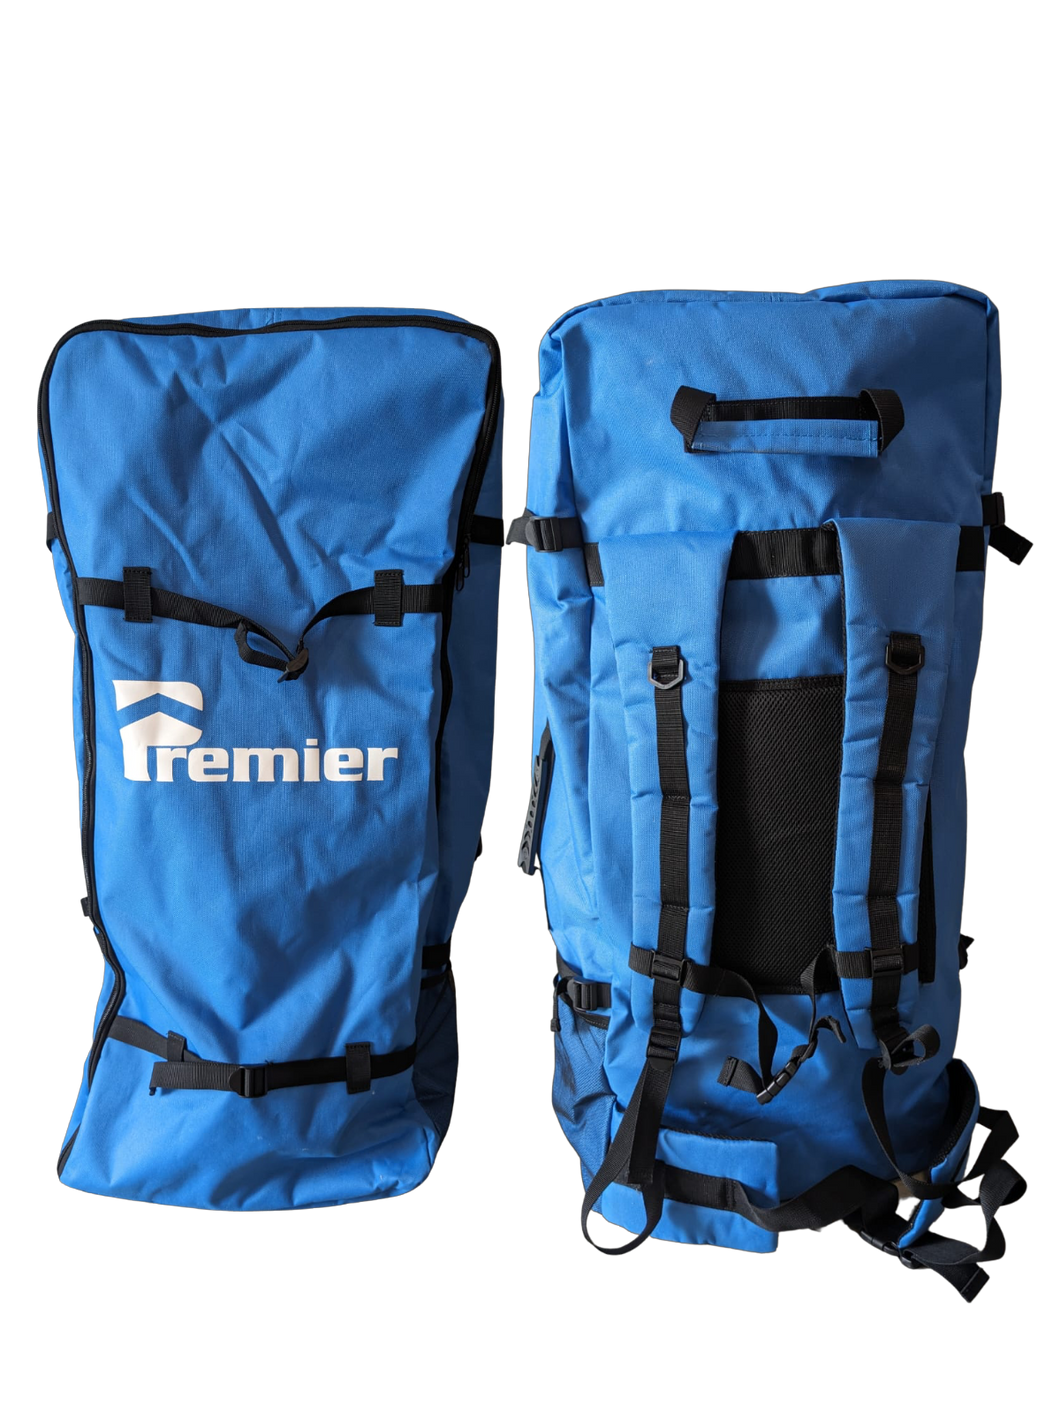 Premier SUP Backpack